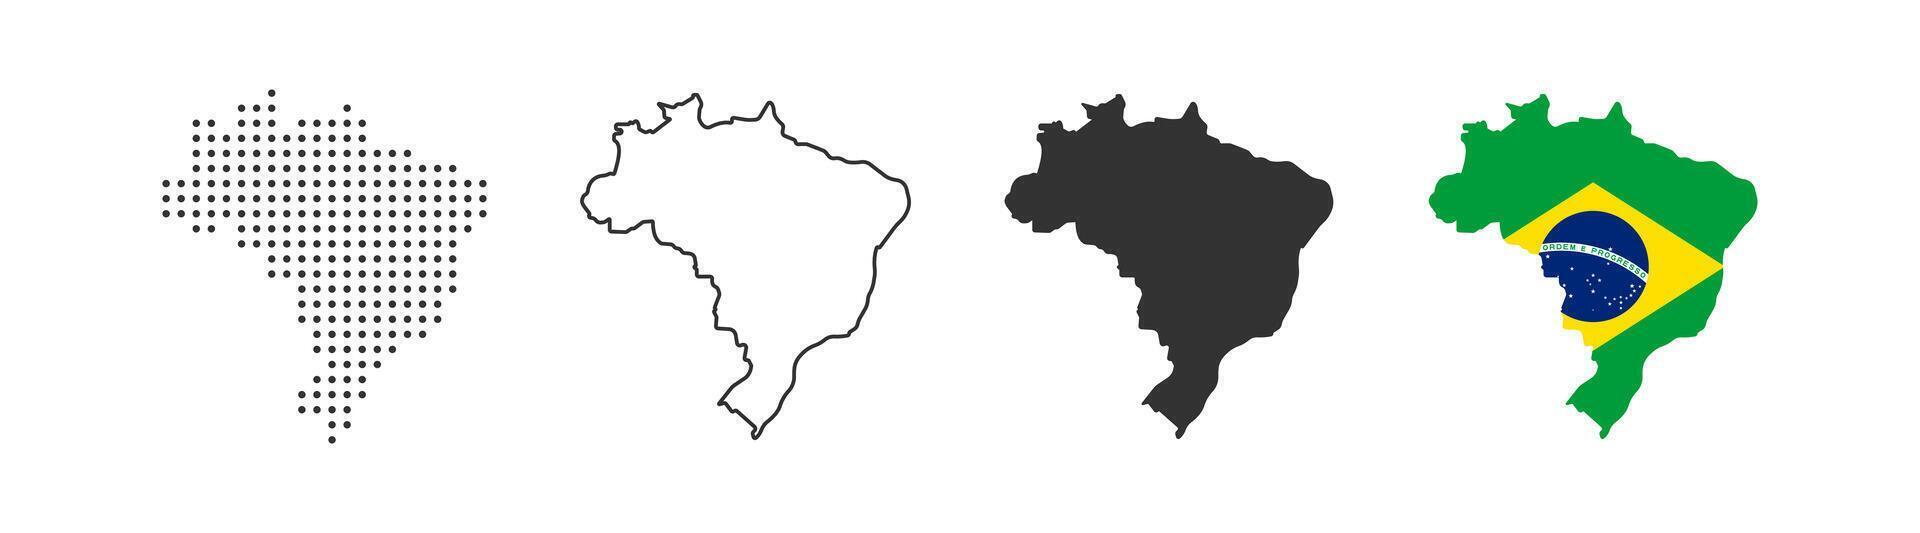 brasil mapa icono. brasilia borde. país bandera signo. Europa geografía. vector ilustración.